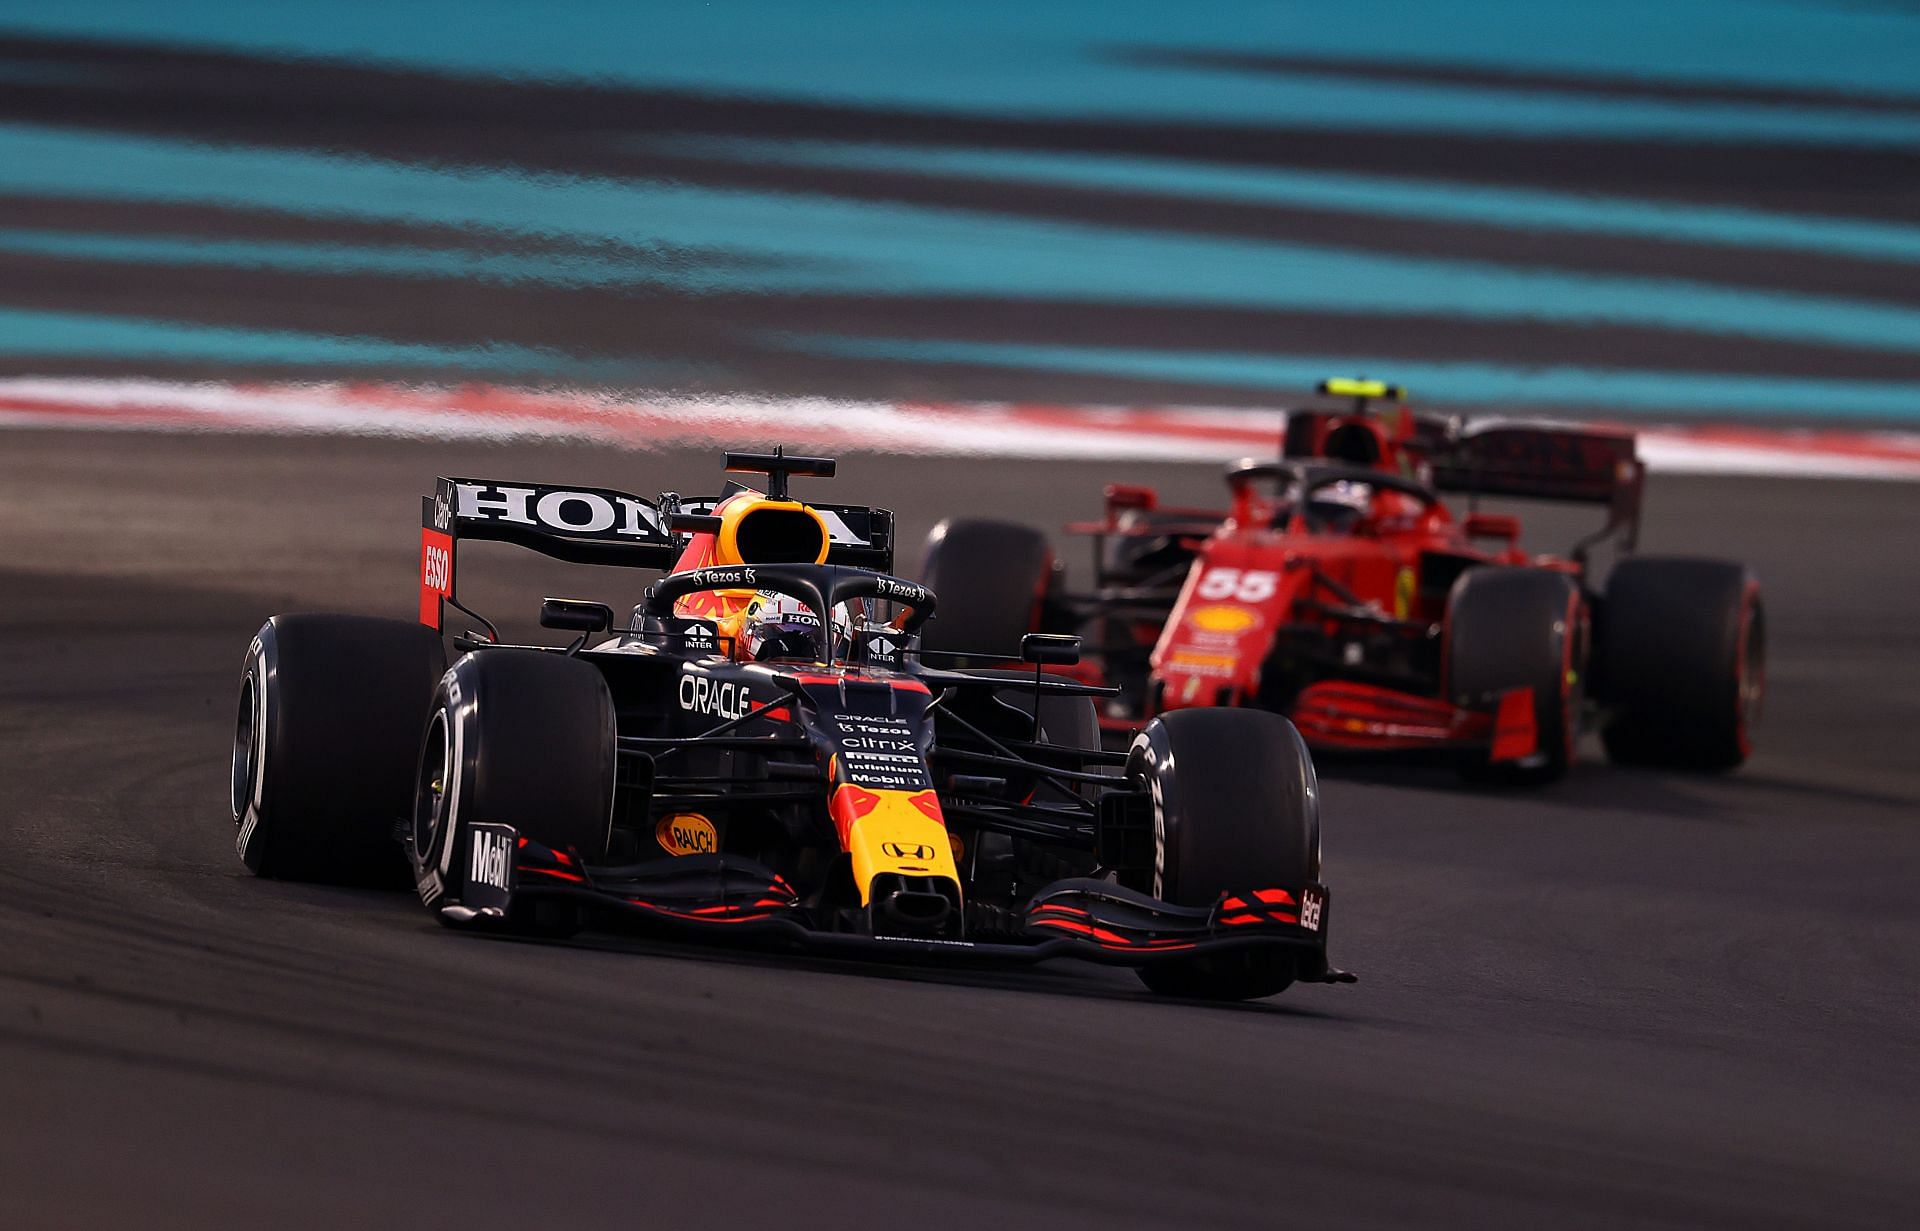 F1 Grand Prix of Abu Dhabi - Red Bull&#039;s Max Verstappen (#33, fore) leads the Ferrari of Carlos Sainz (#55)